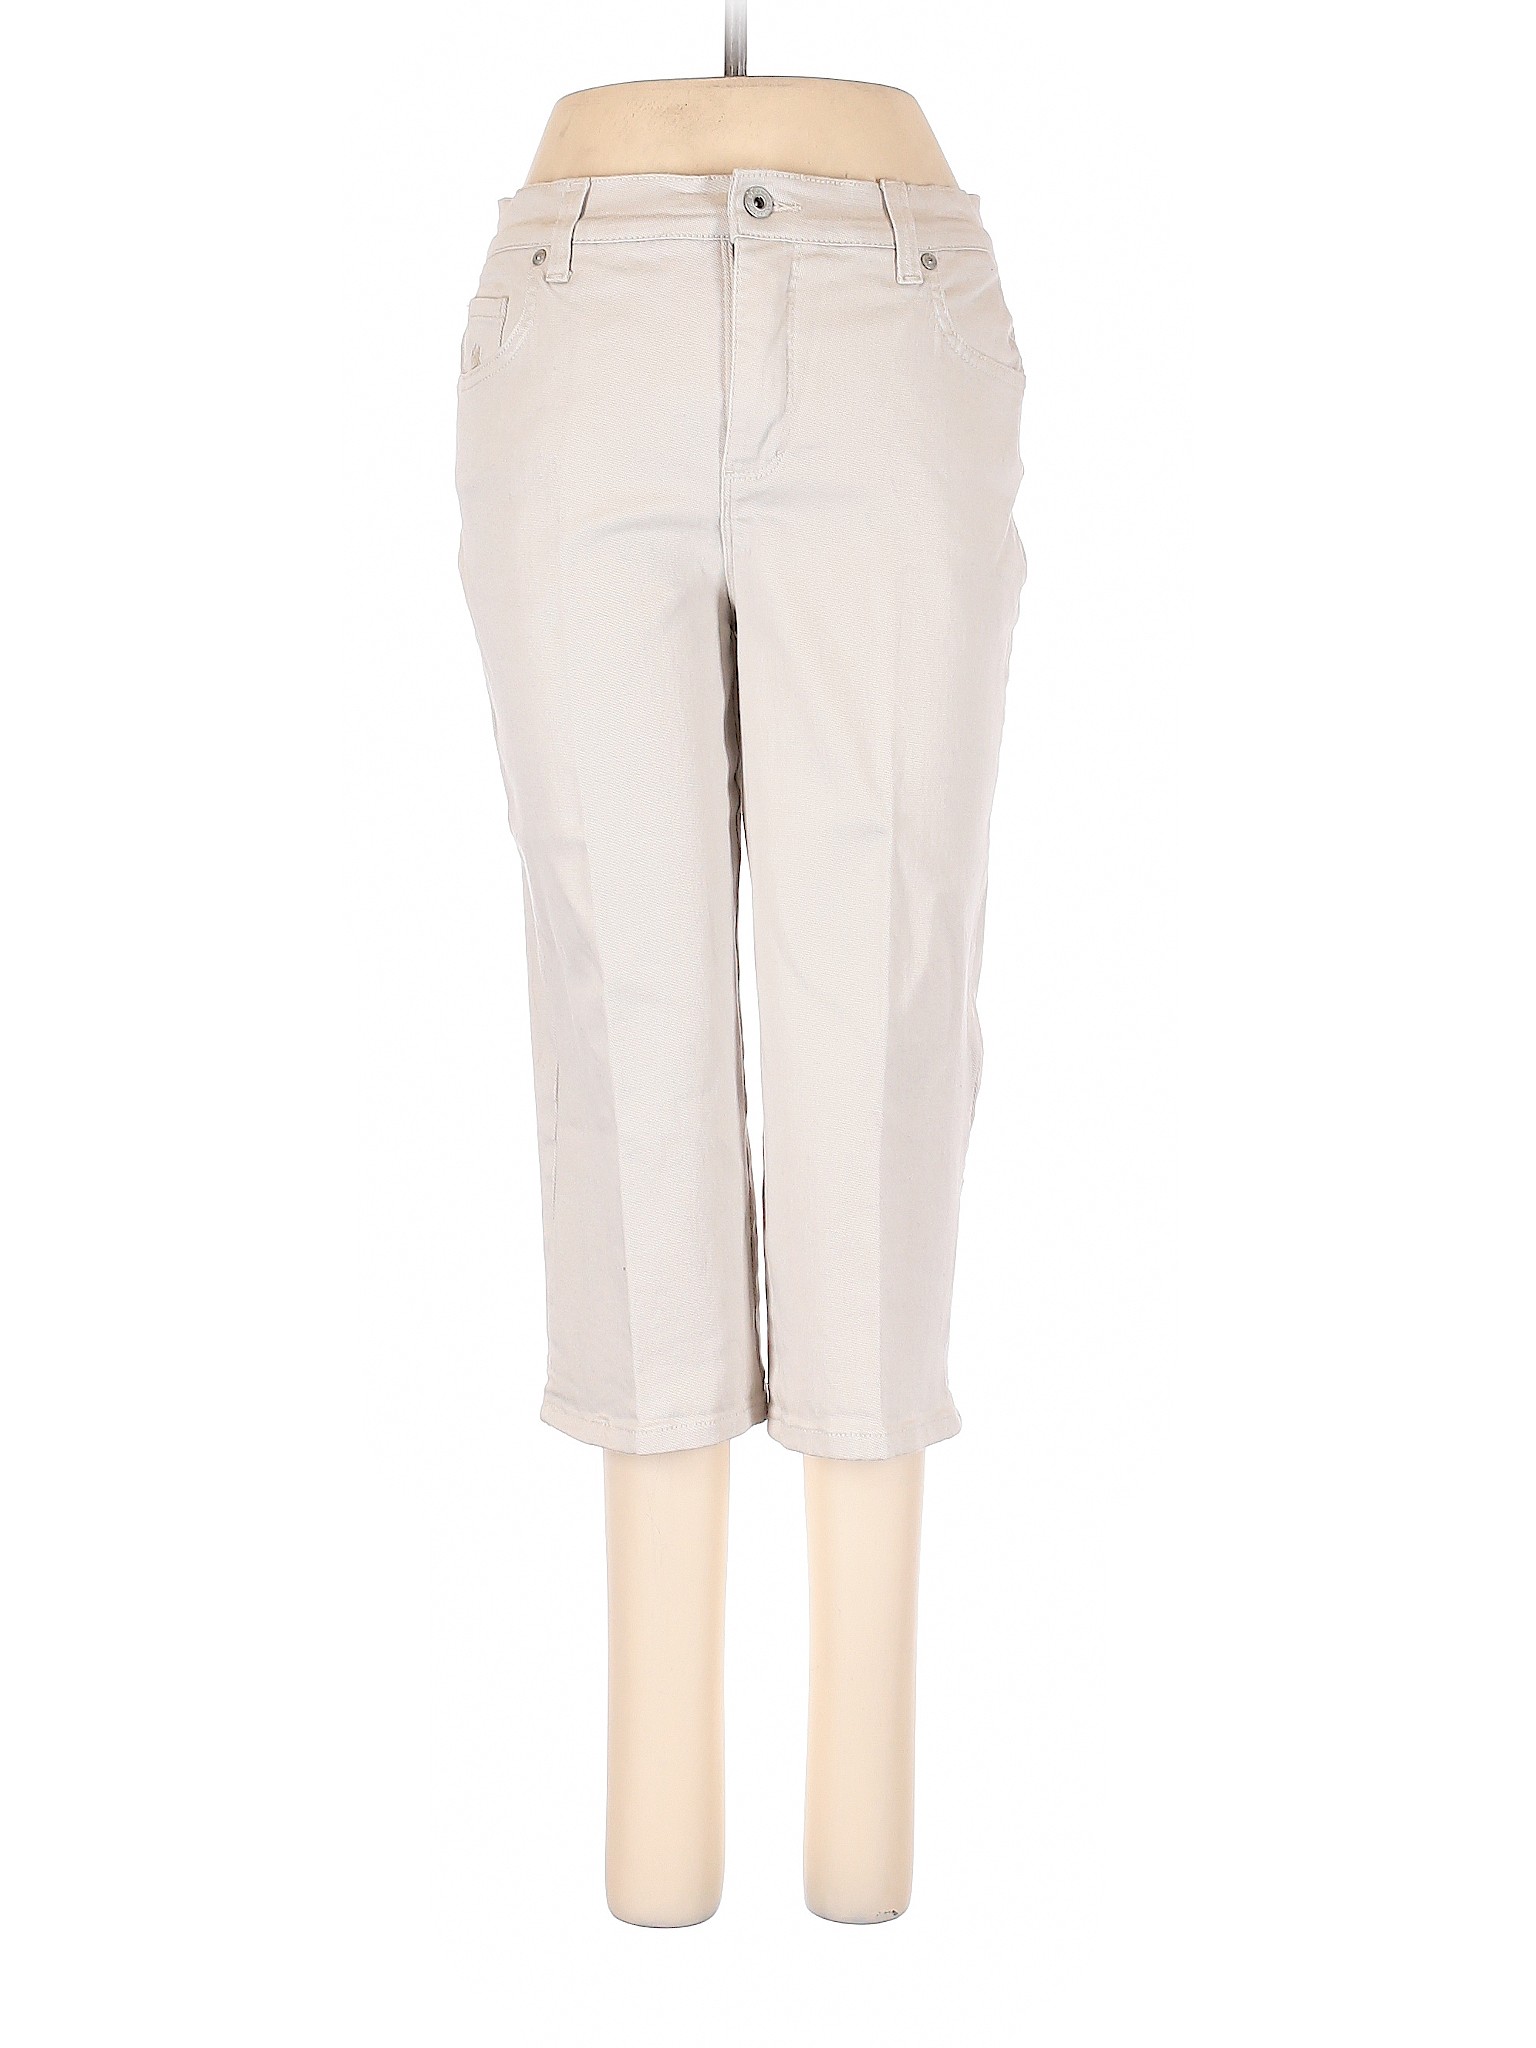 Gloria Vanderbilt Women Brown Jeans 4 | eBay